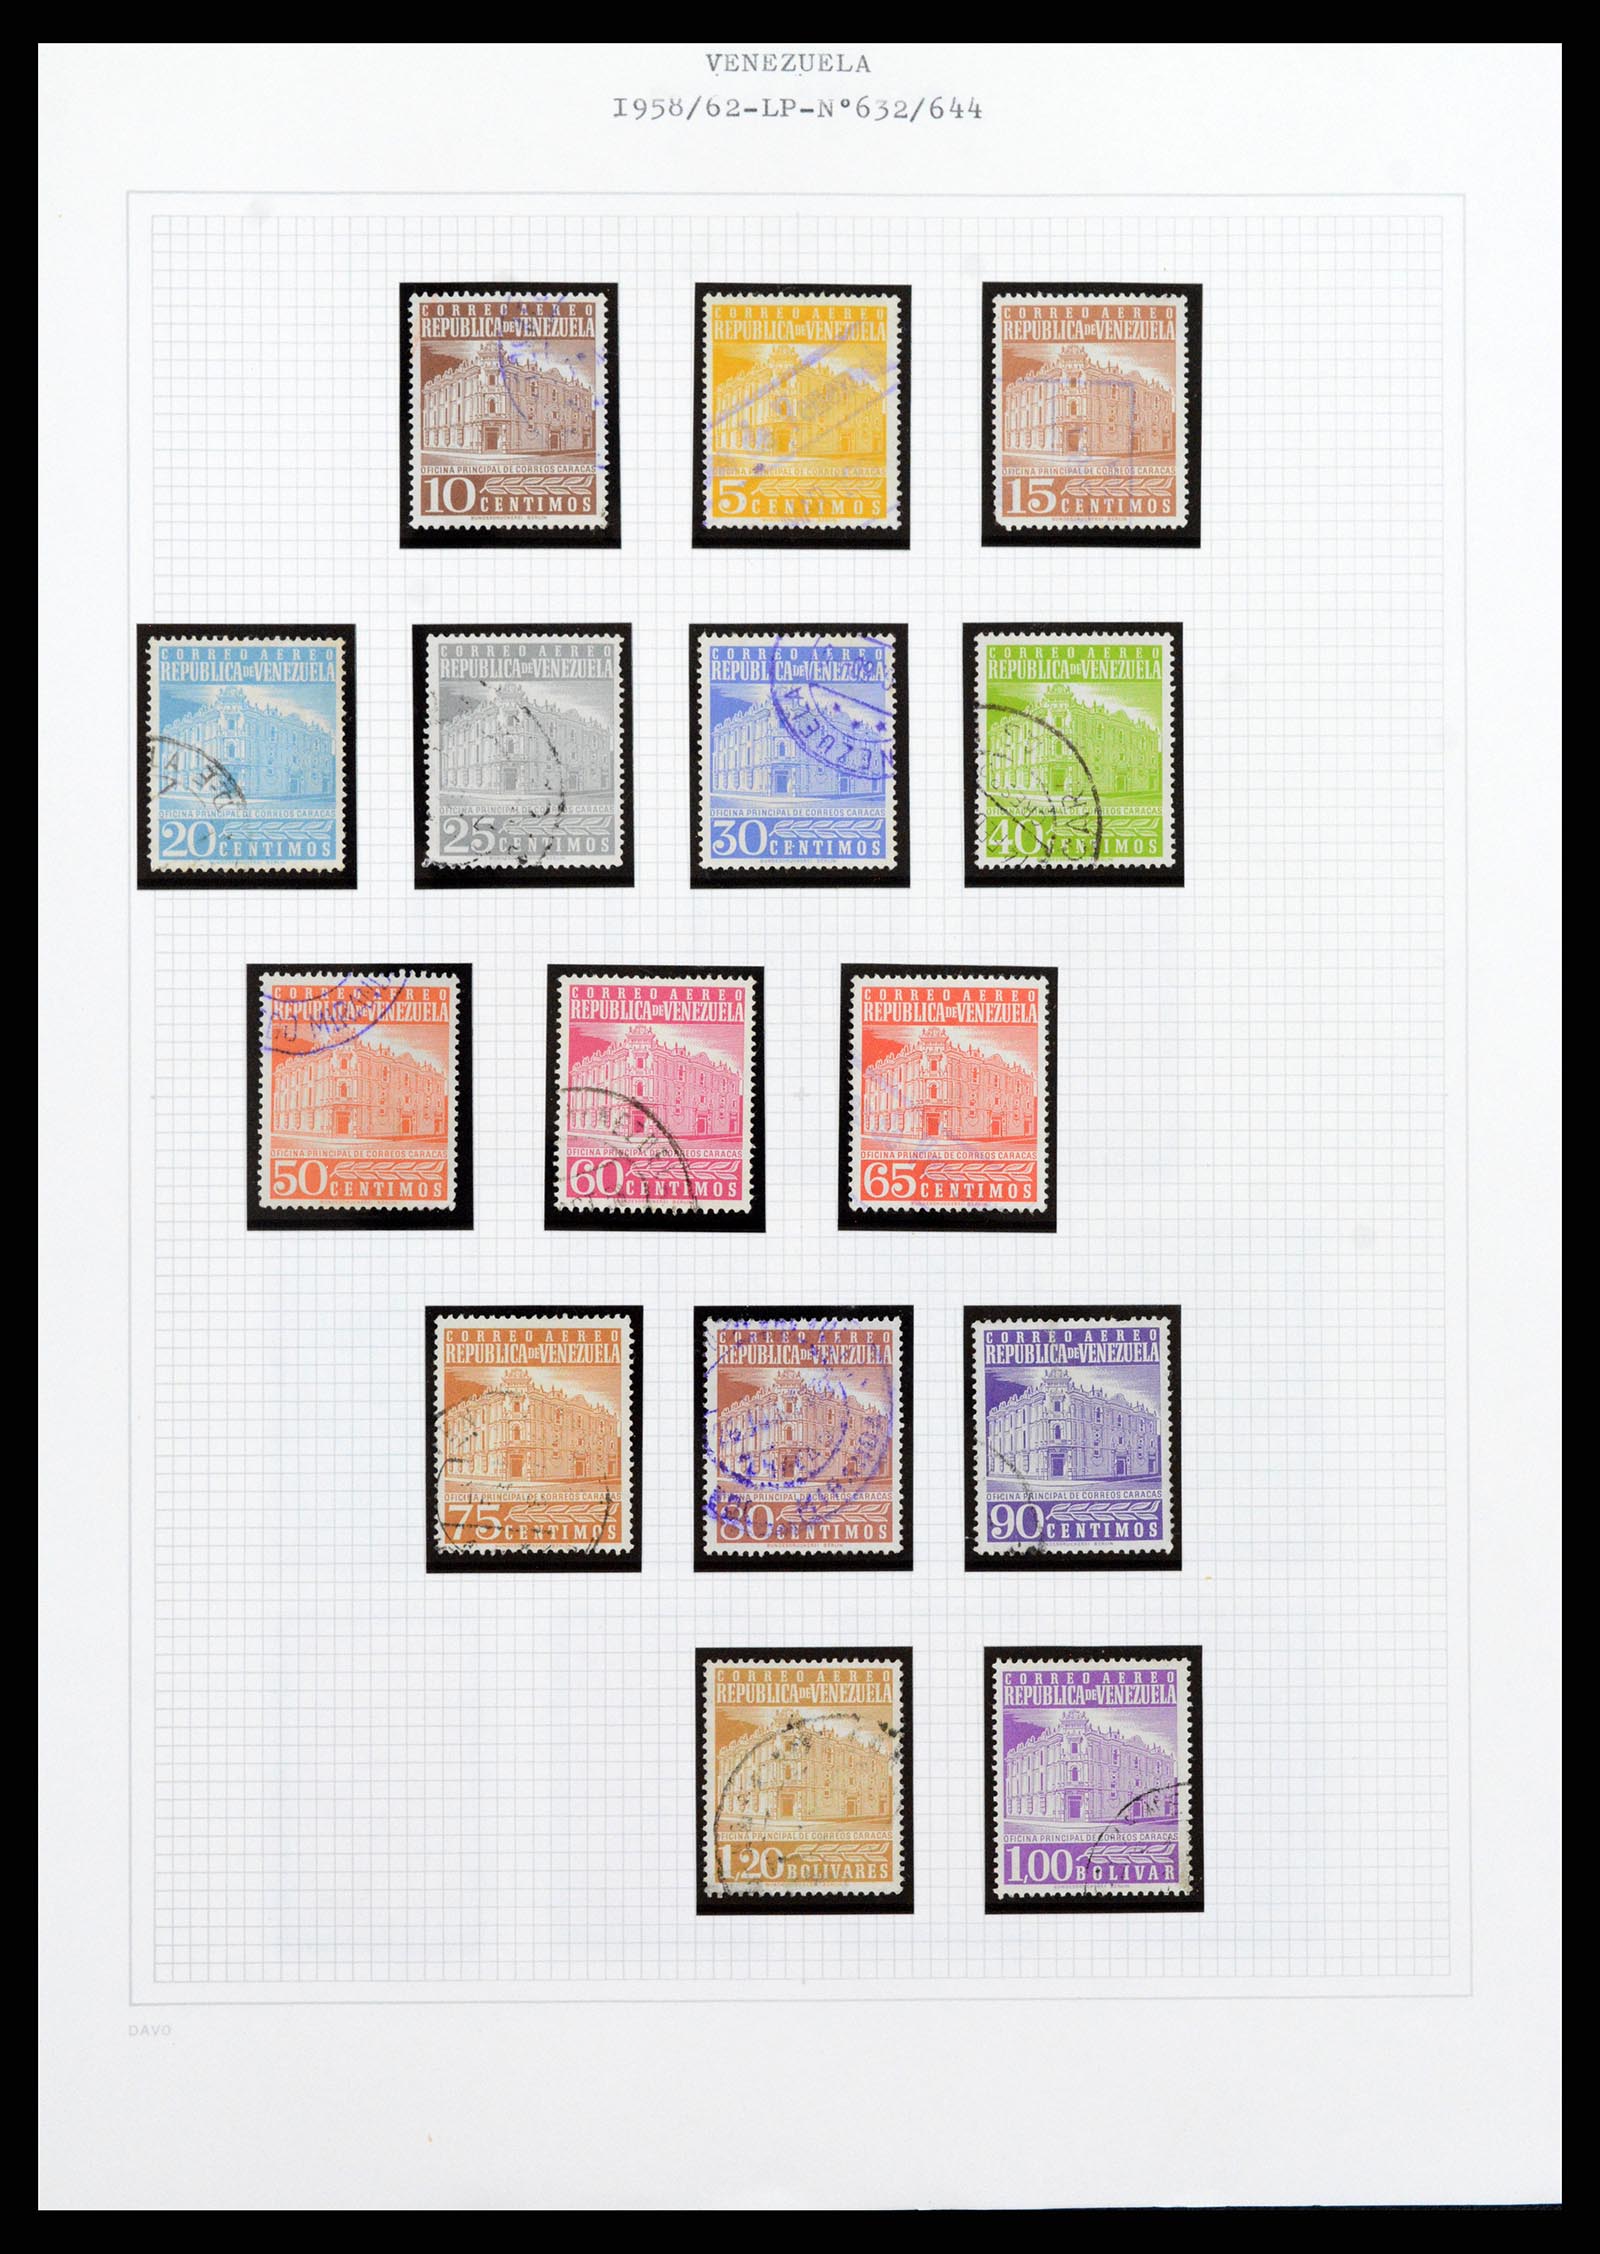 37353 094 - Stamp collection 37353 Venezuela 1880-1960.